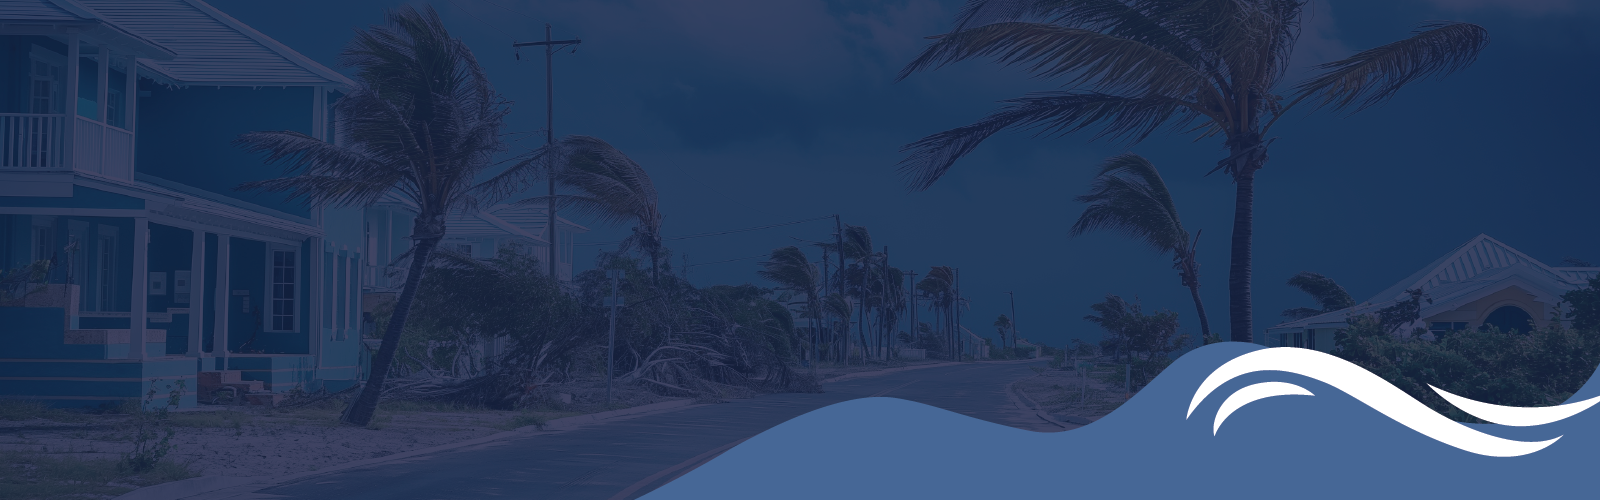 hurricane banner image